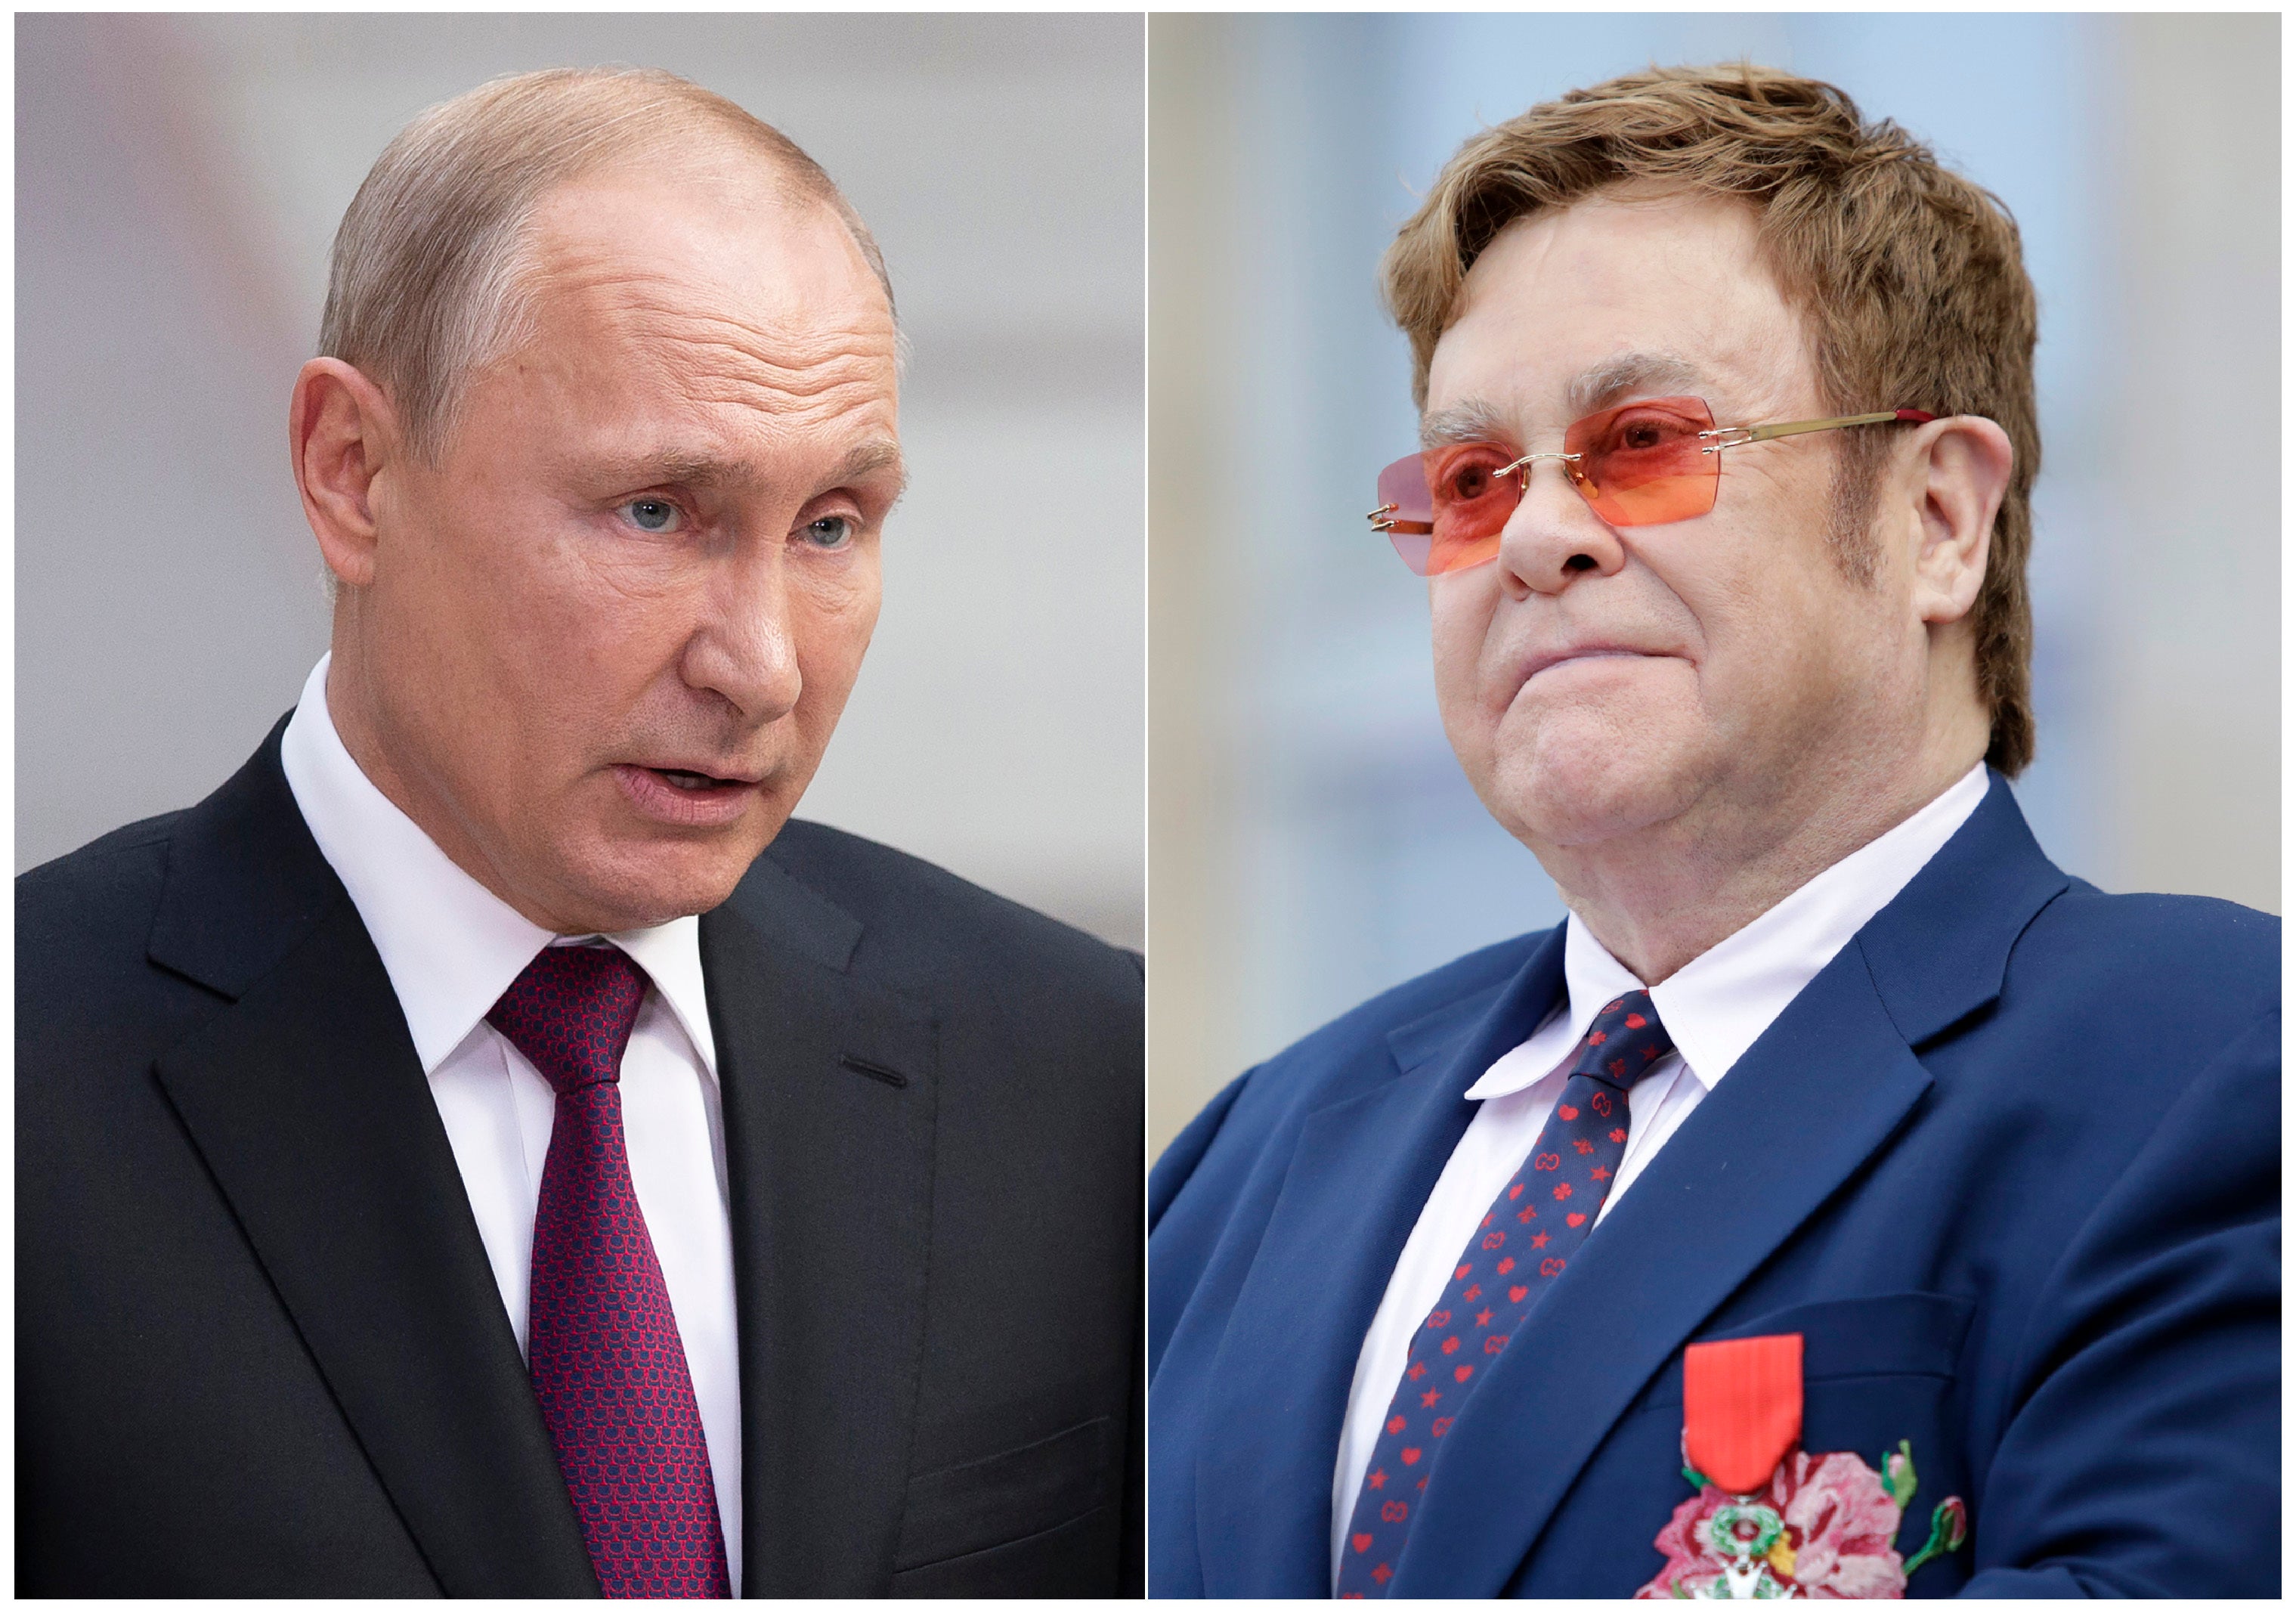 Elton John responds to Vladimir Putin’s LGBTQ comments following ‘Rocketman’ censorship